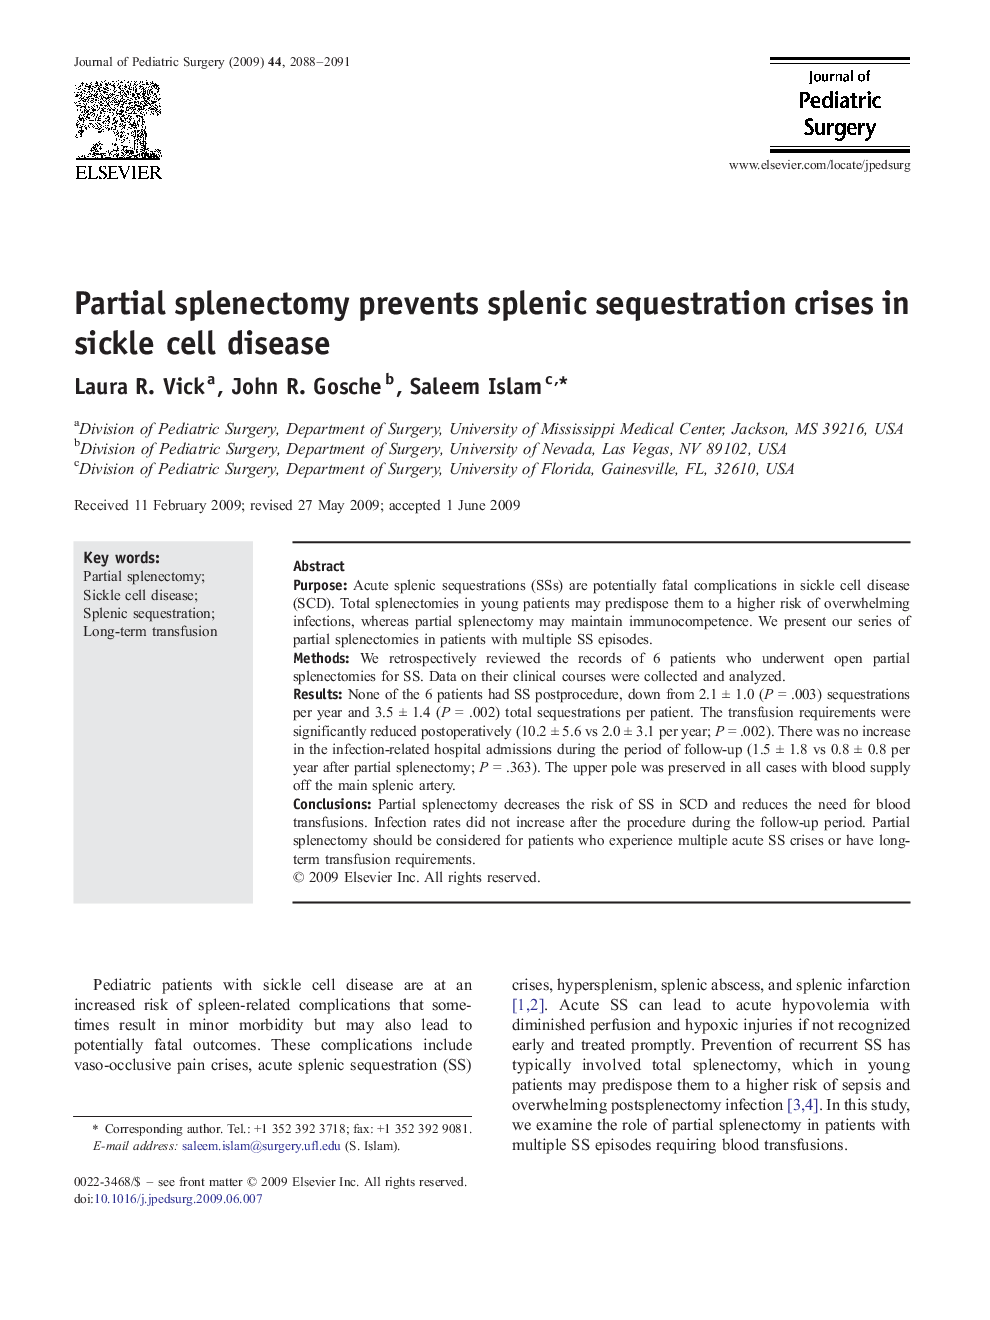 Partial splenectomy prevents splenic sequestration crises in sickle cell disease